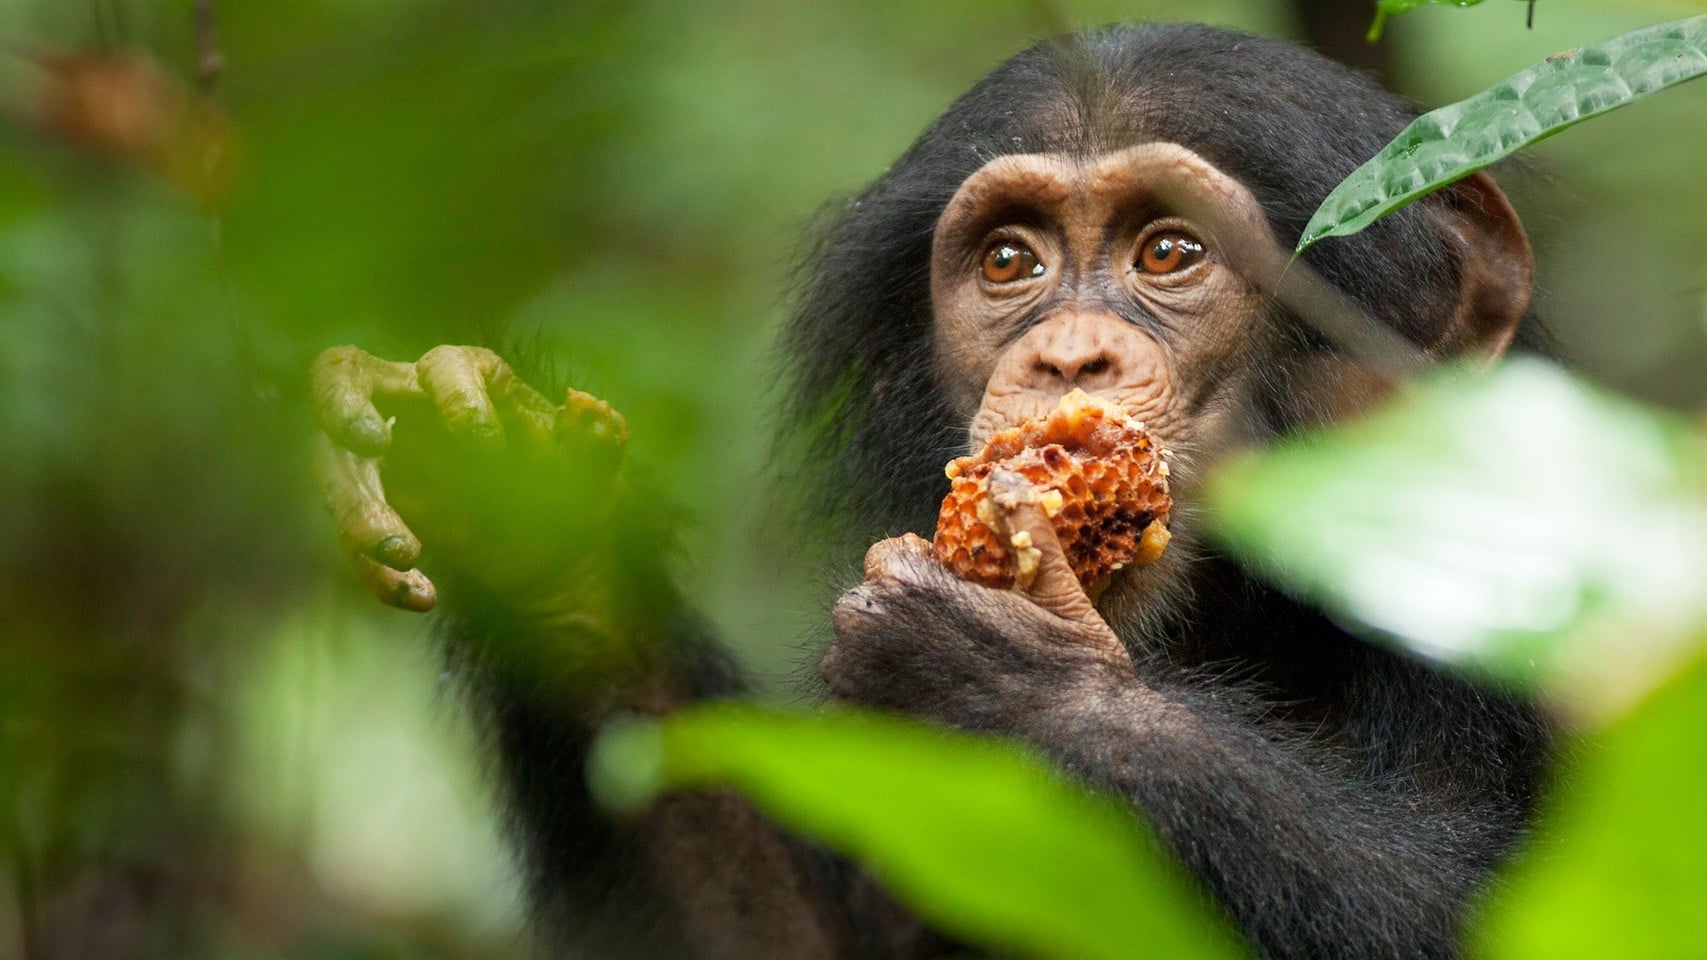 Chimpanzee 2012 123movies